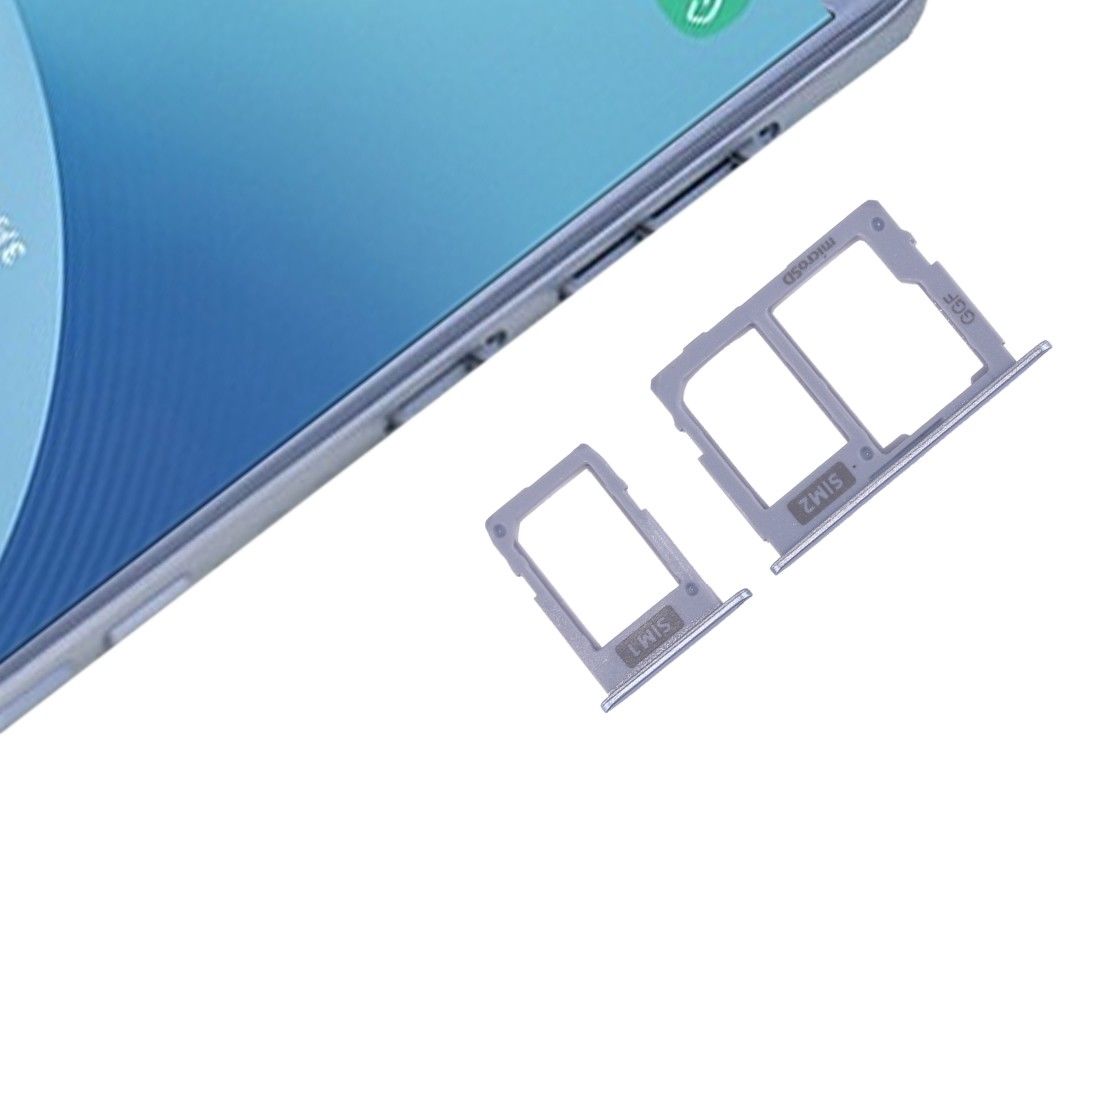 Samsung Galaxy J3 J5 J7 2017 Micro SD & Nano SIM Card Tray Holder - Blue for [product_price] - First Help Tech